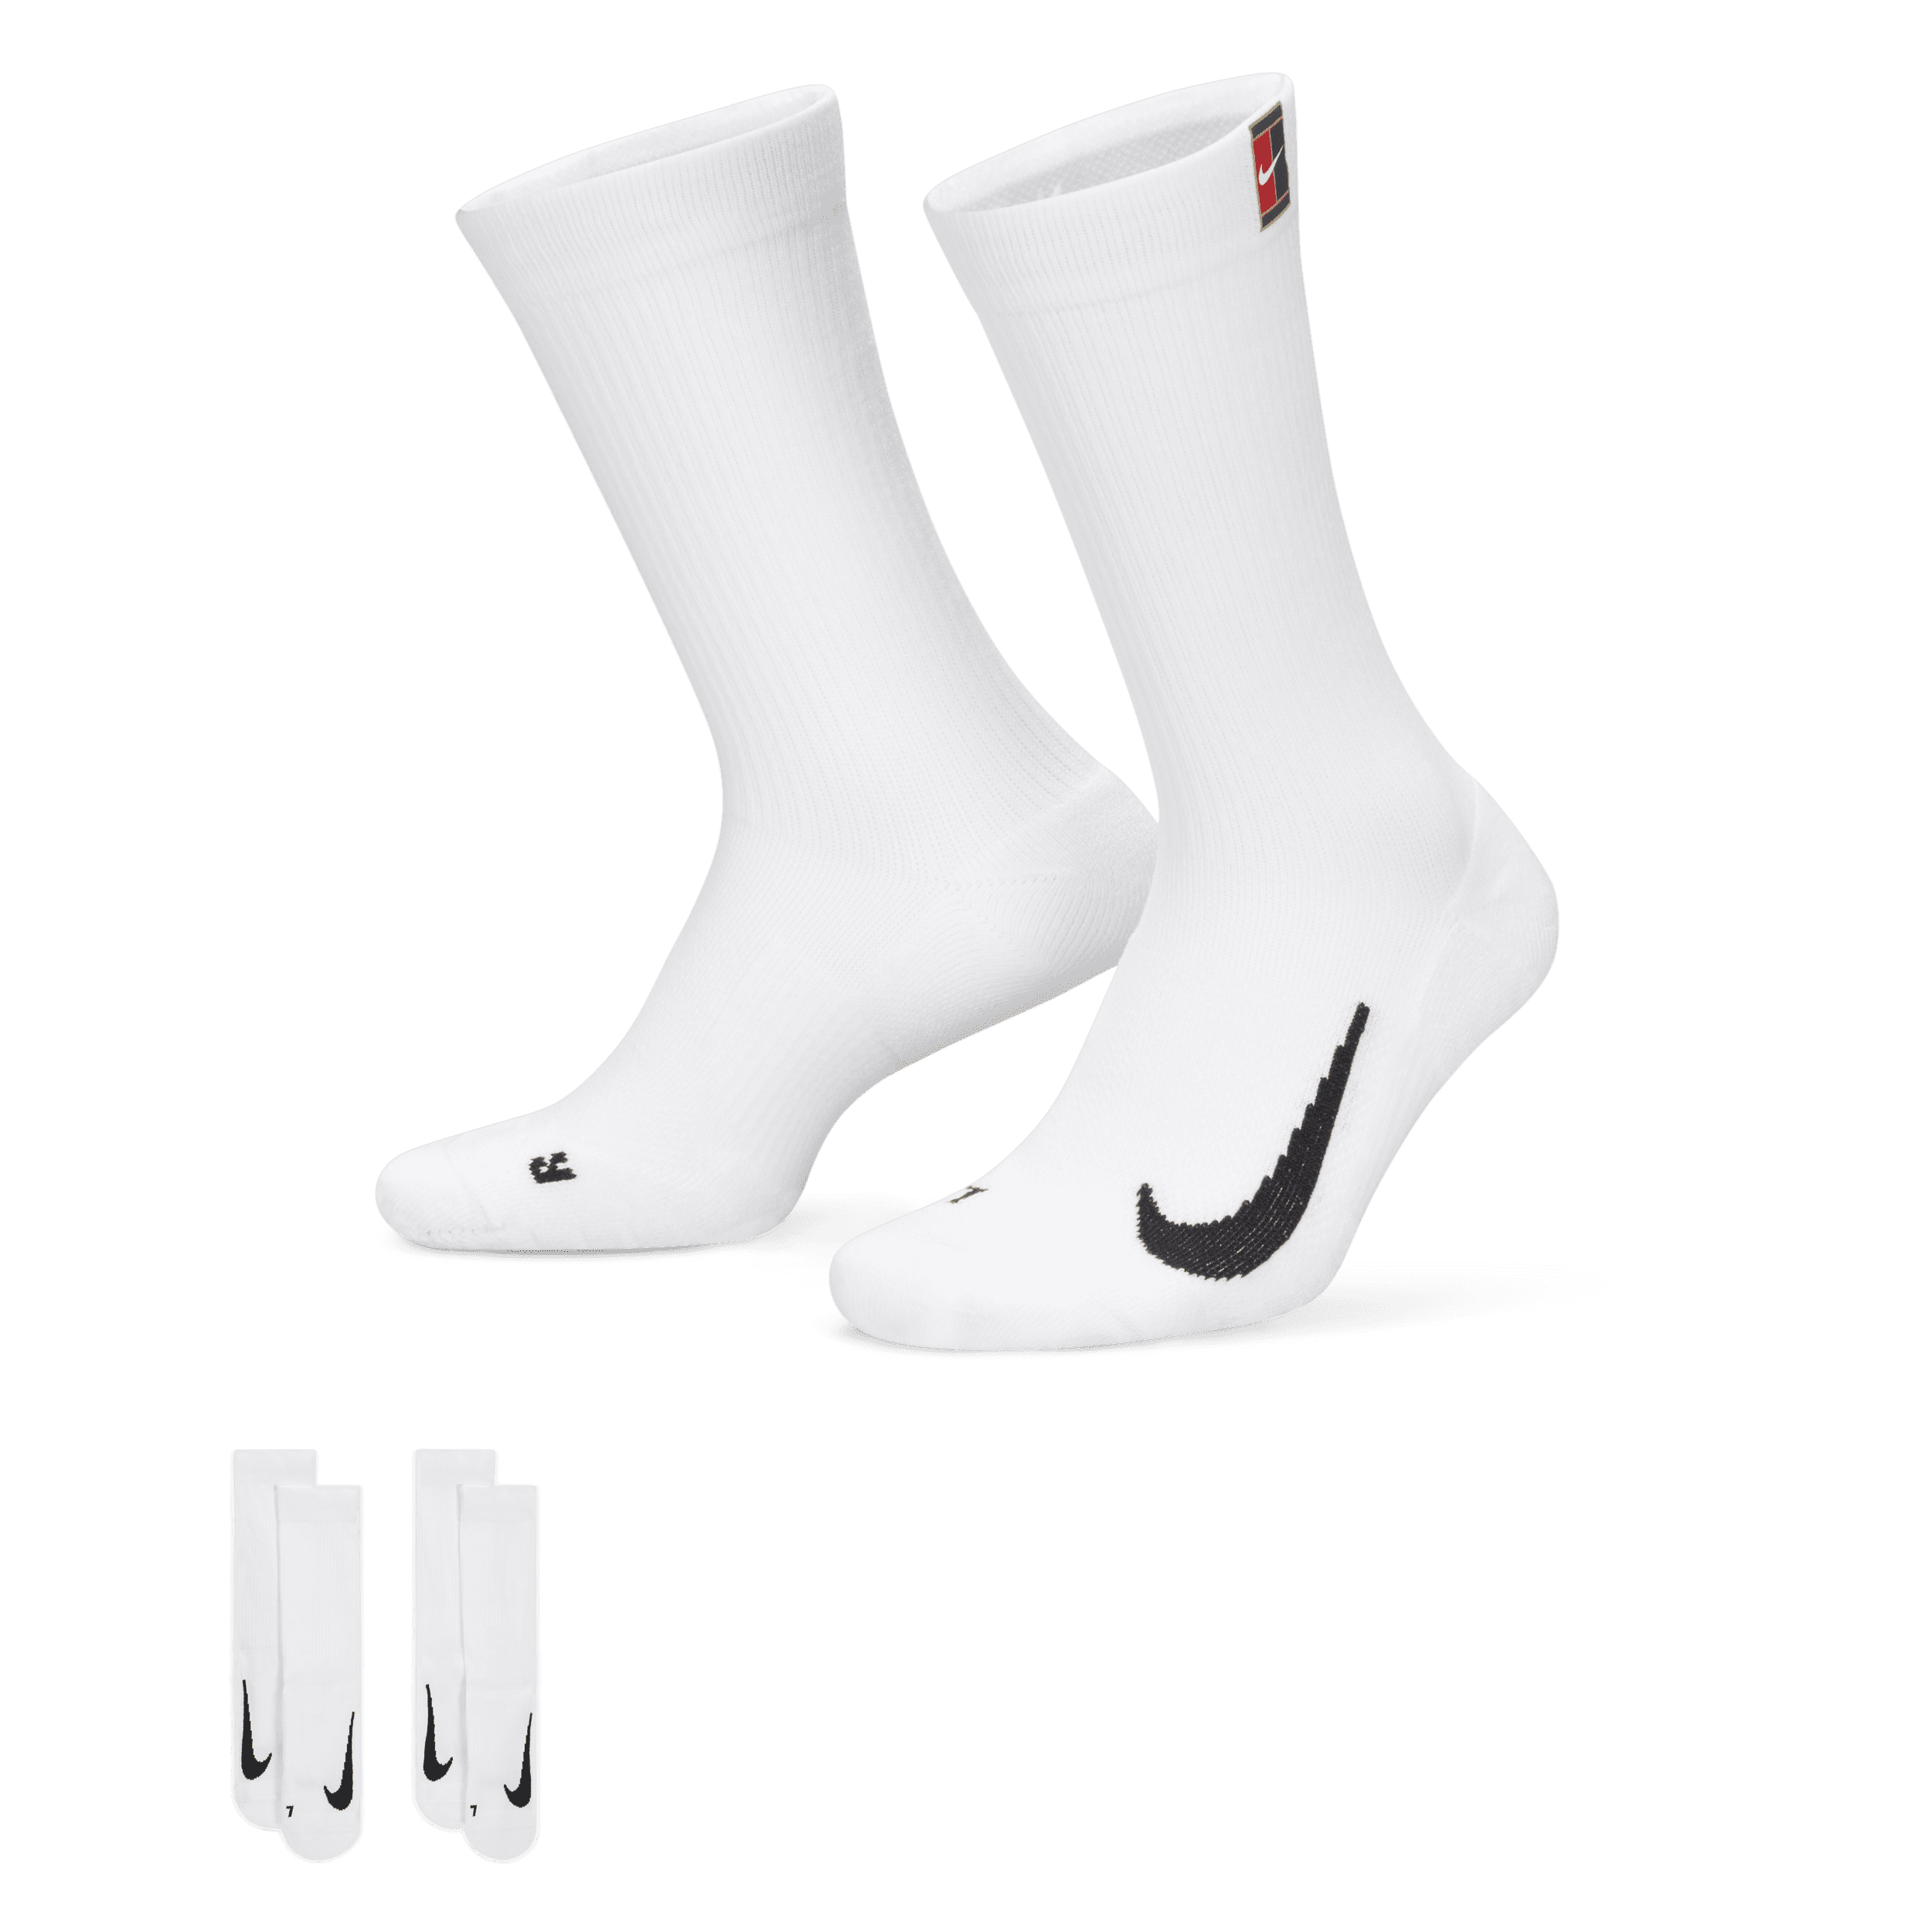 Calze da tennis NikeCourt Multiplier Cushioned di media lunghezza (2 paia) - Bianco